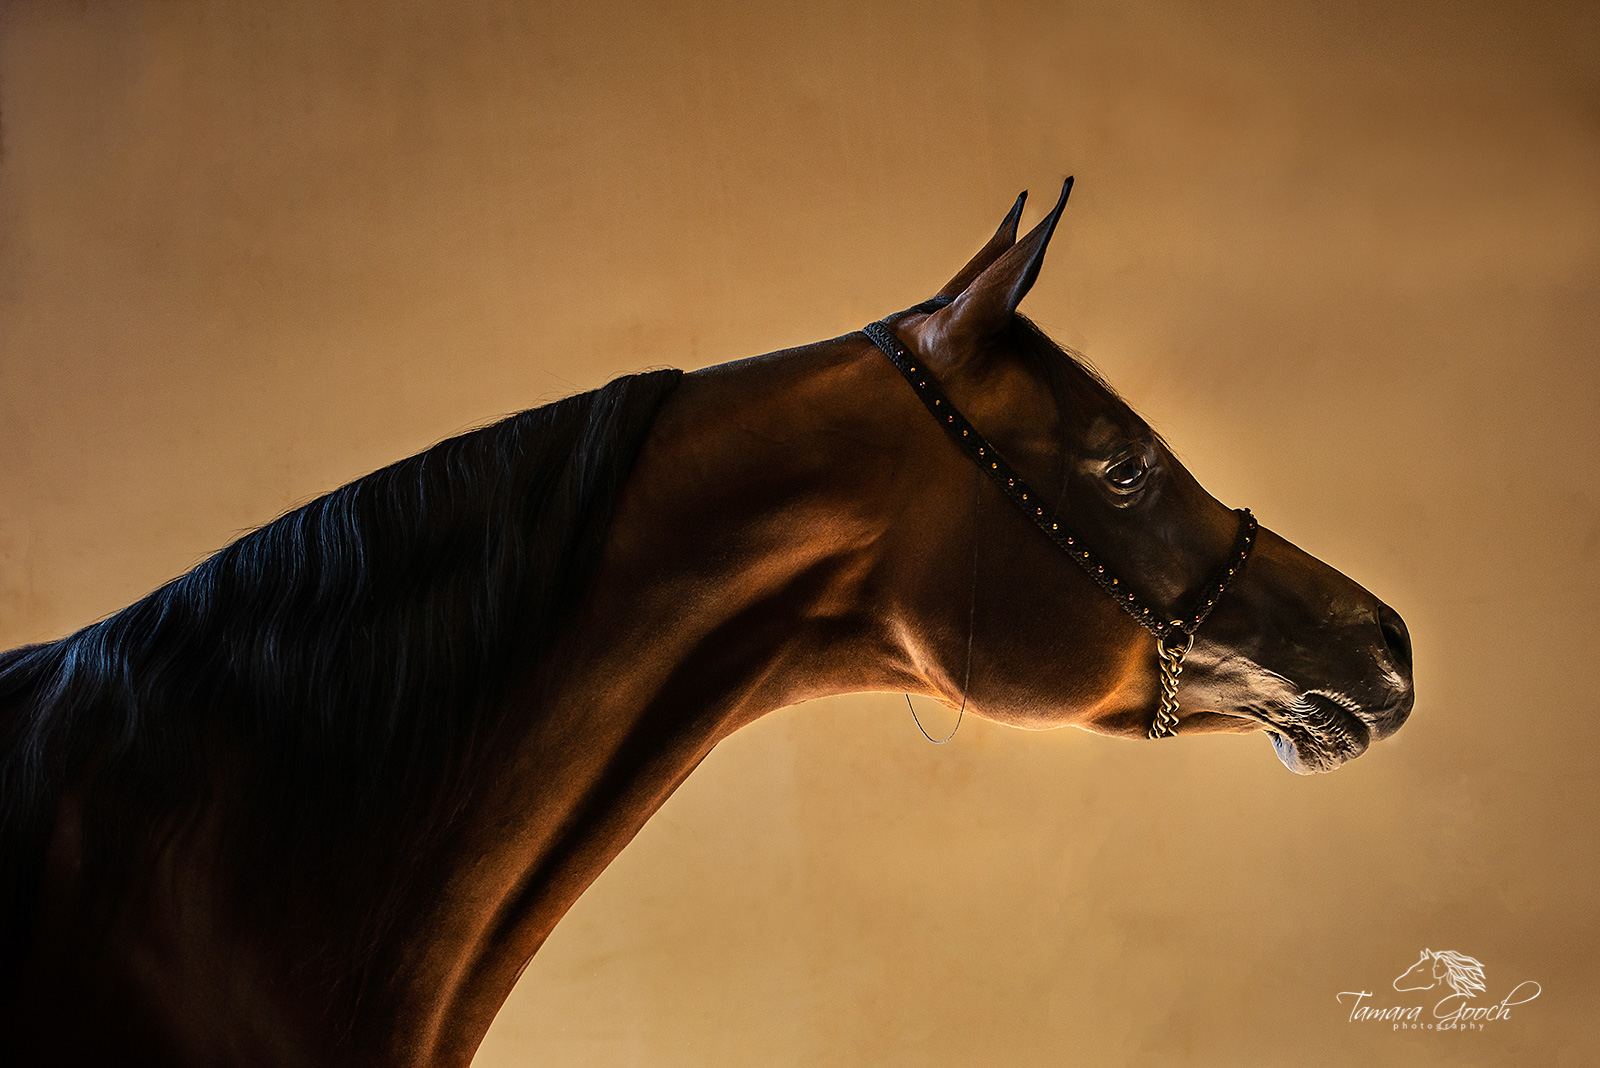 Glowing Arabian horse in halter